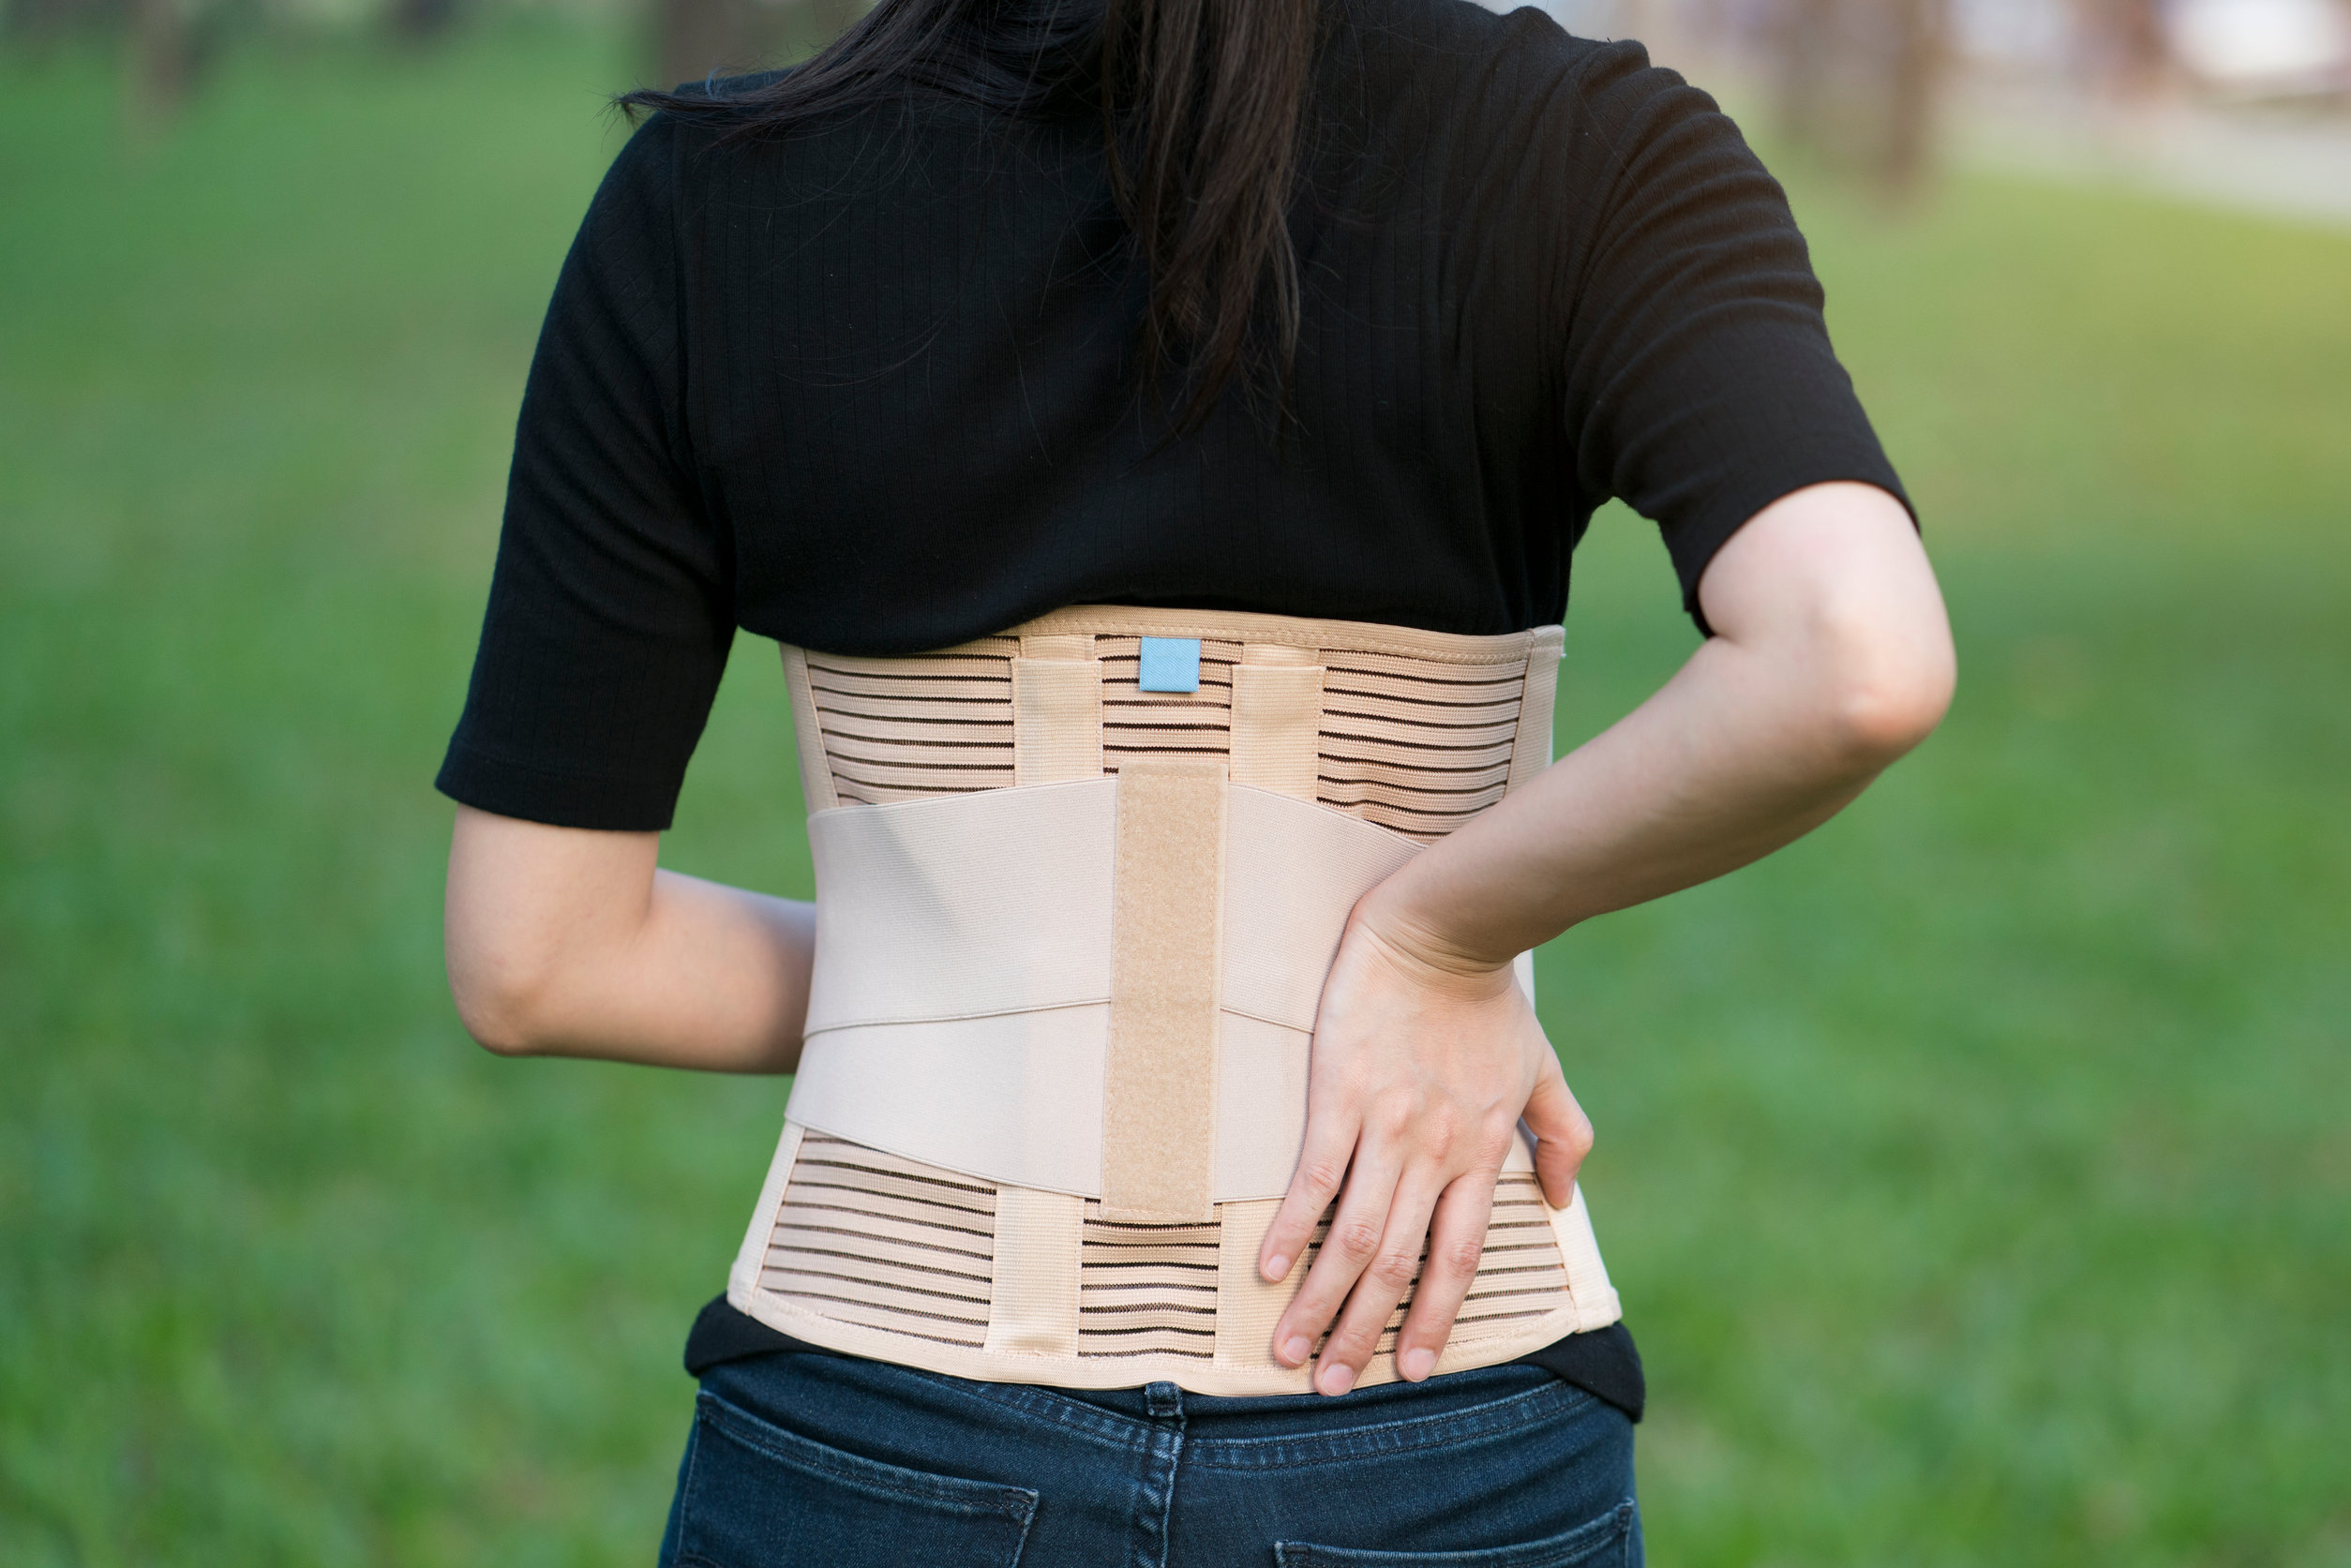 Incredi-belt Lumbar Support Belt for Back Pain